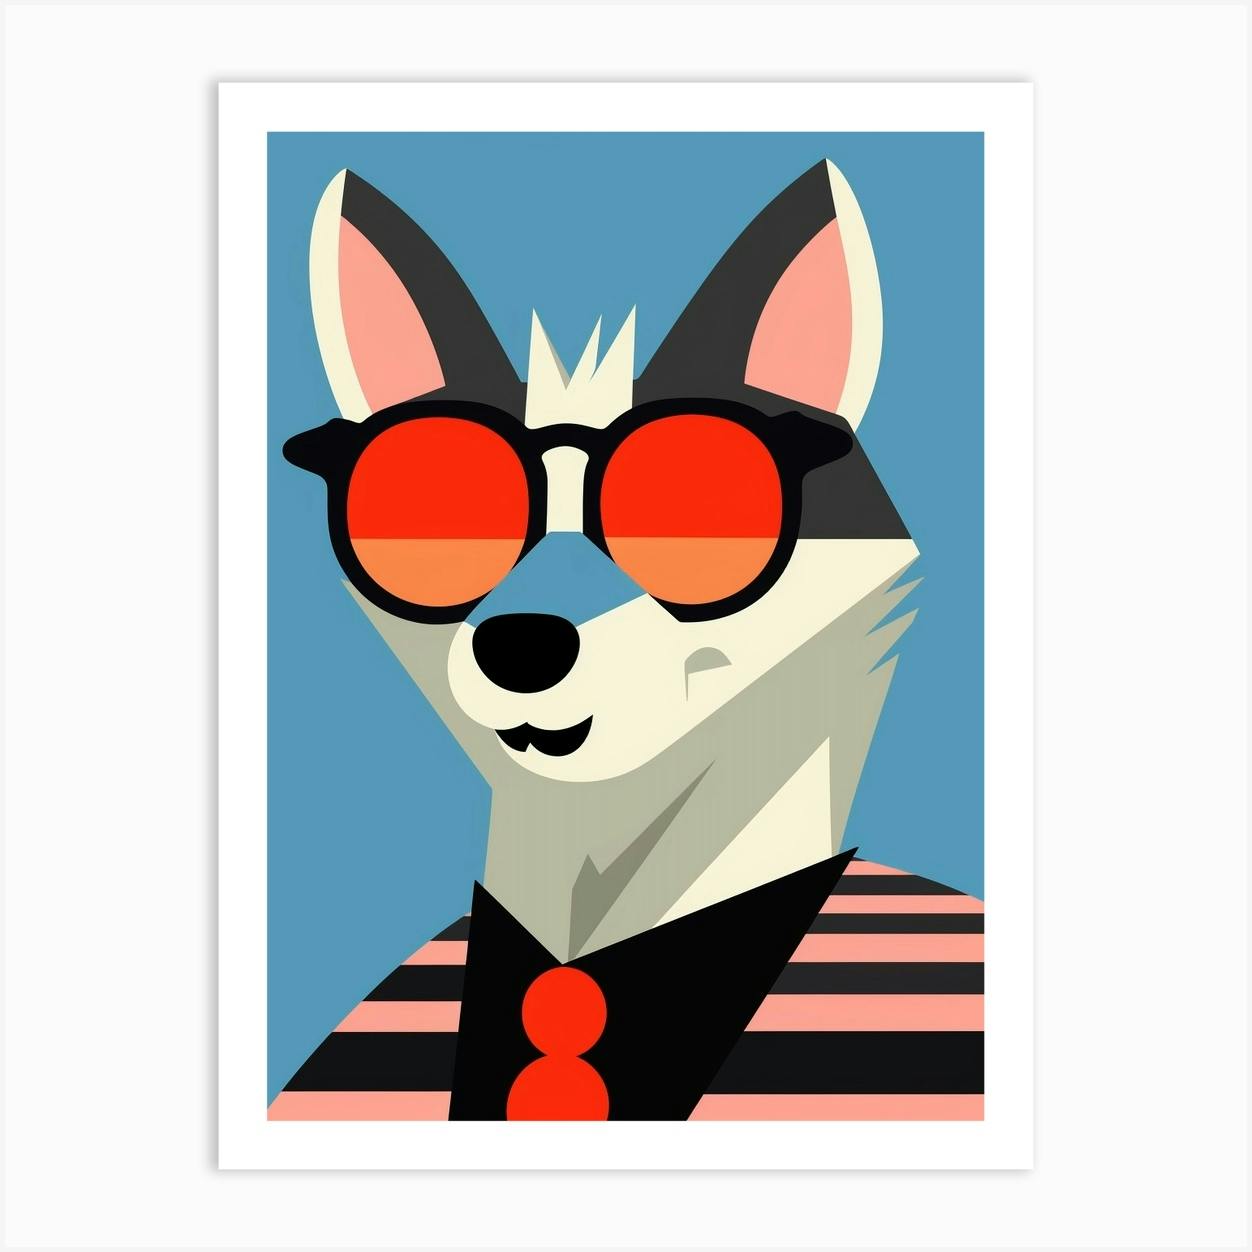 Portrait Of A Wolf Wearing Sunglasses by OddRed496 on DeviantArt